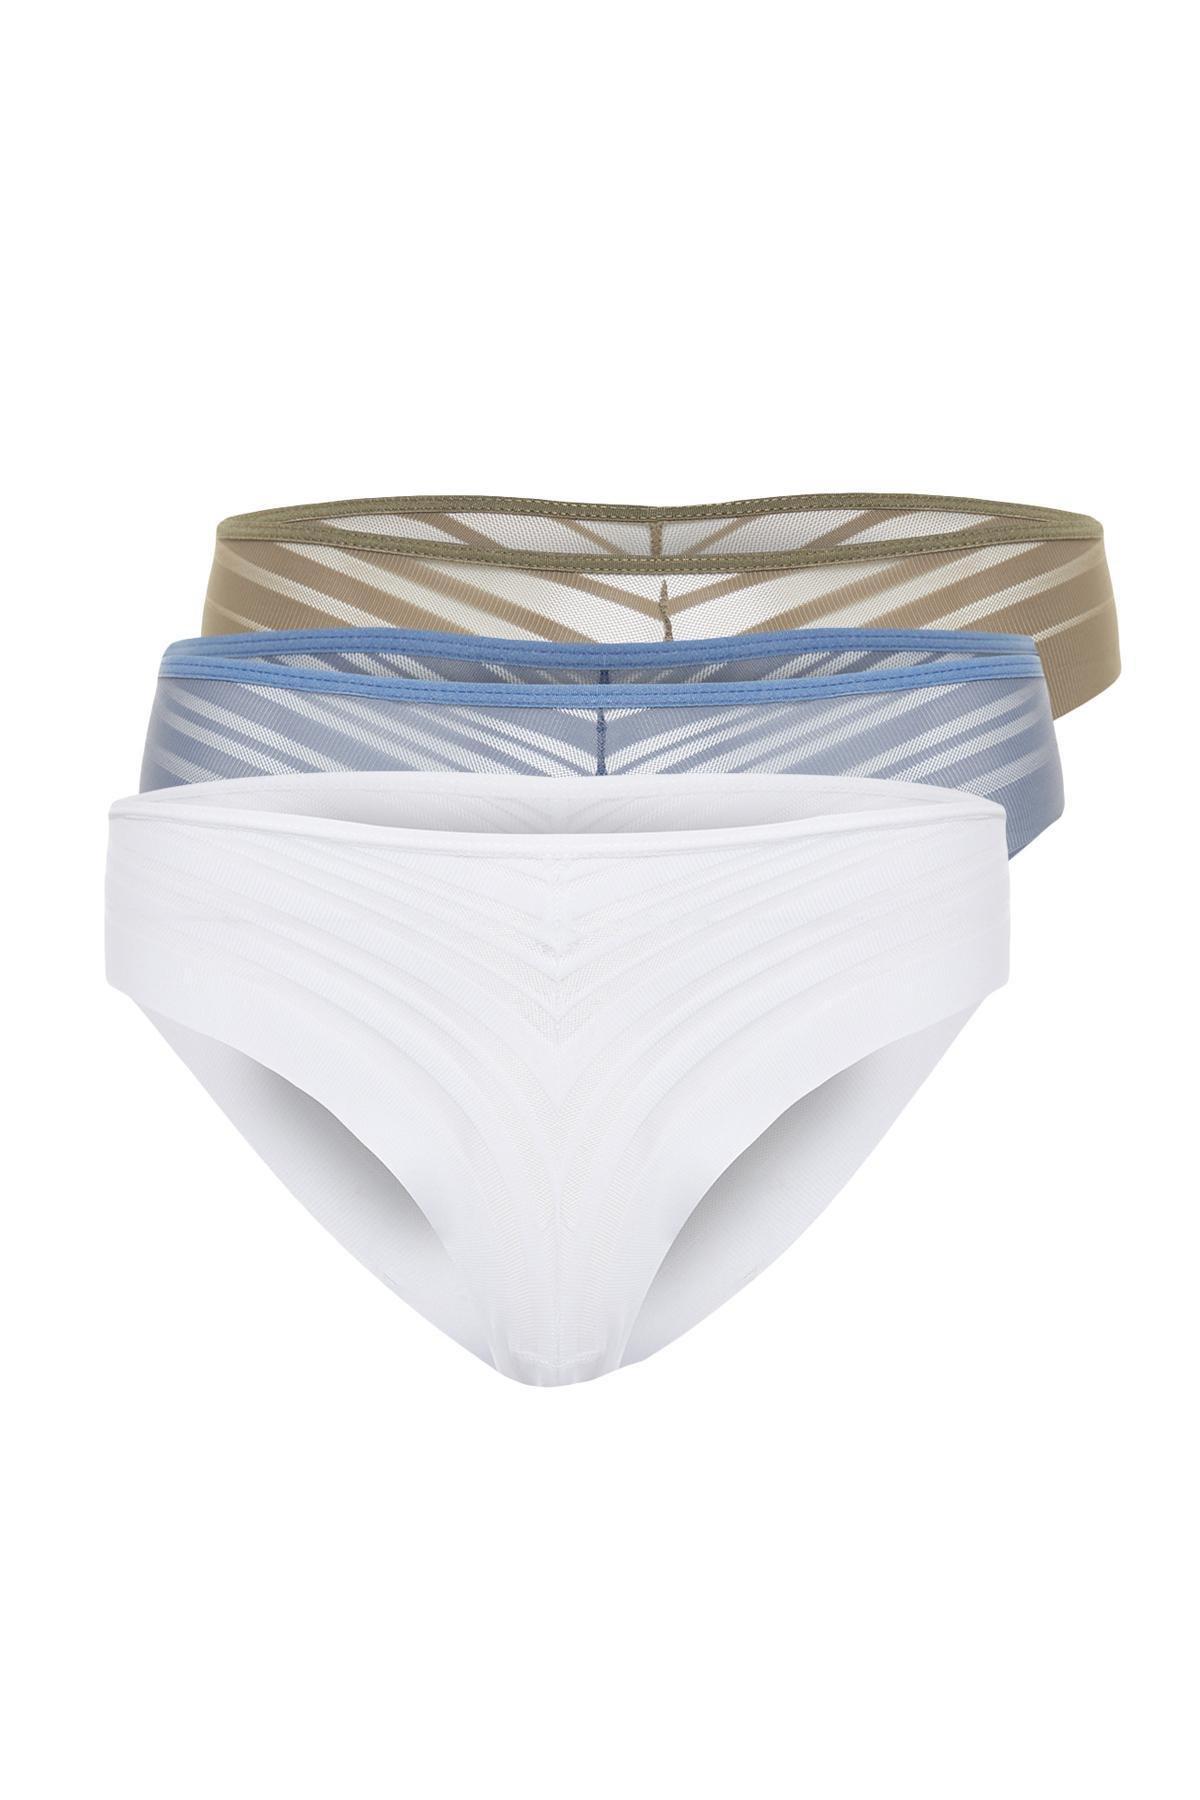 Trendyol - Multicolour Micro Brazilian Panties, Set Of 3